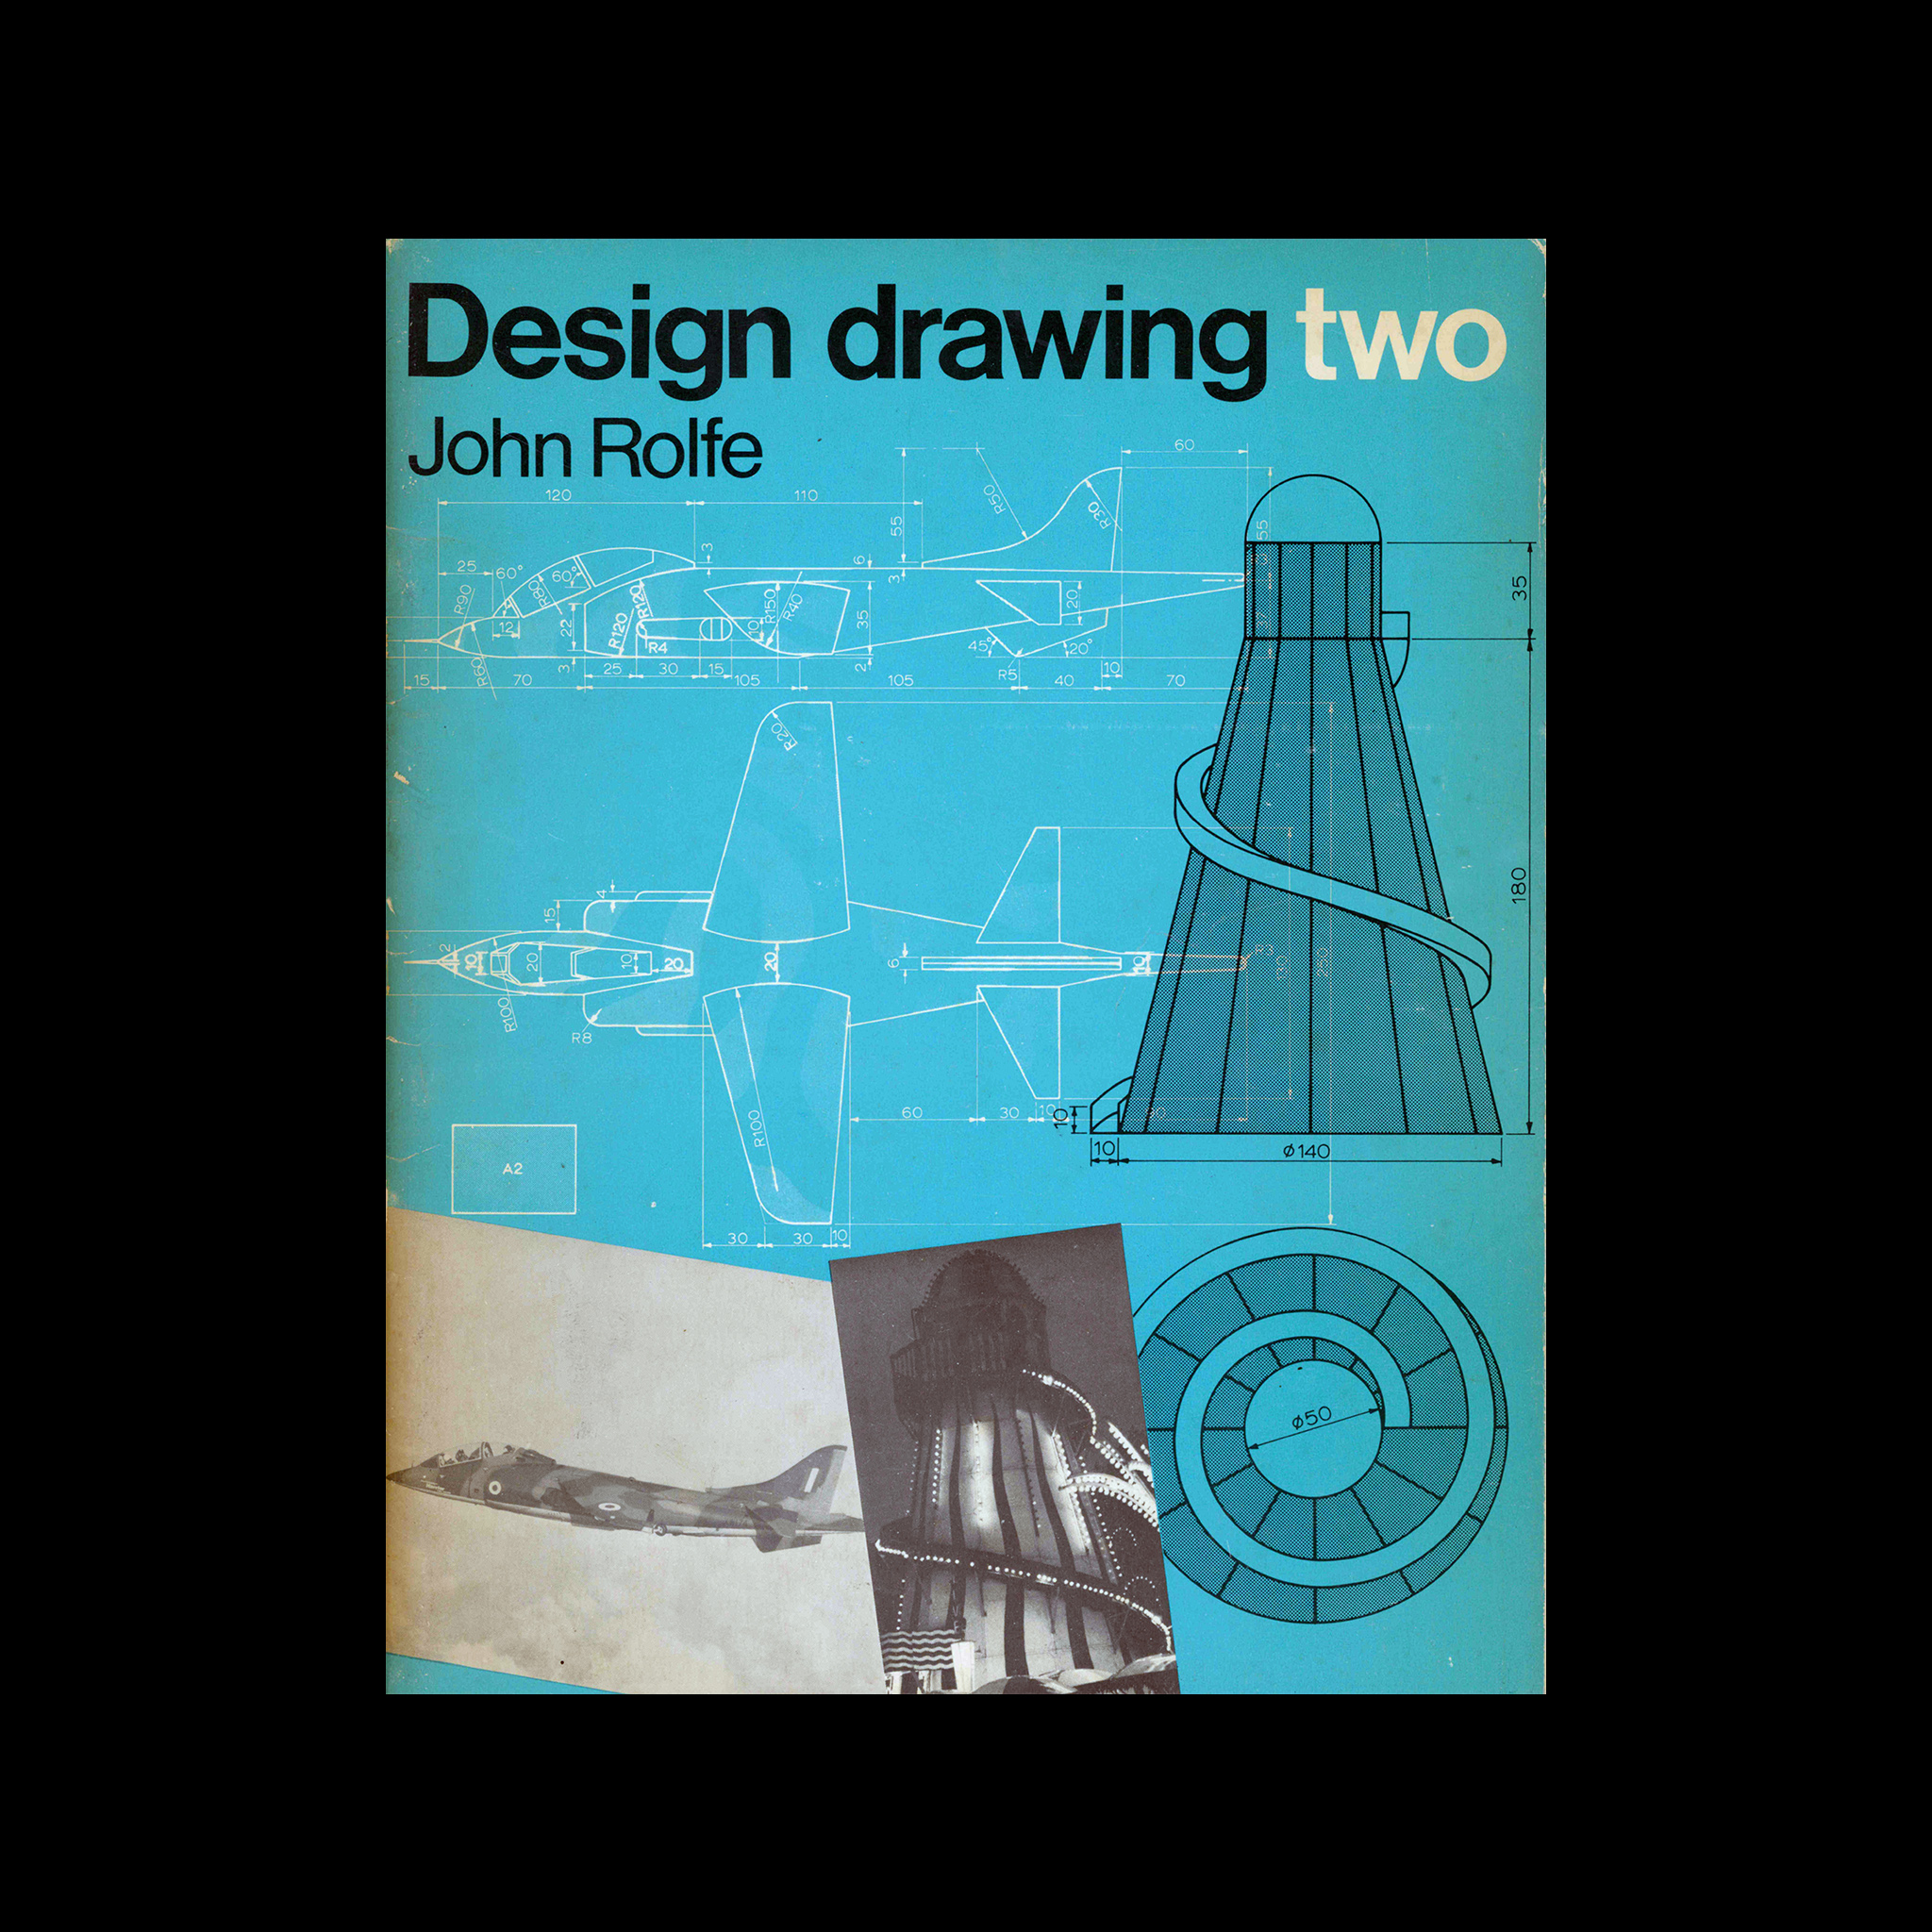 Design Drawing Two, John Rolfe, 1977